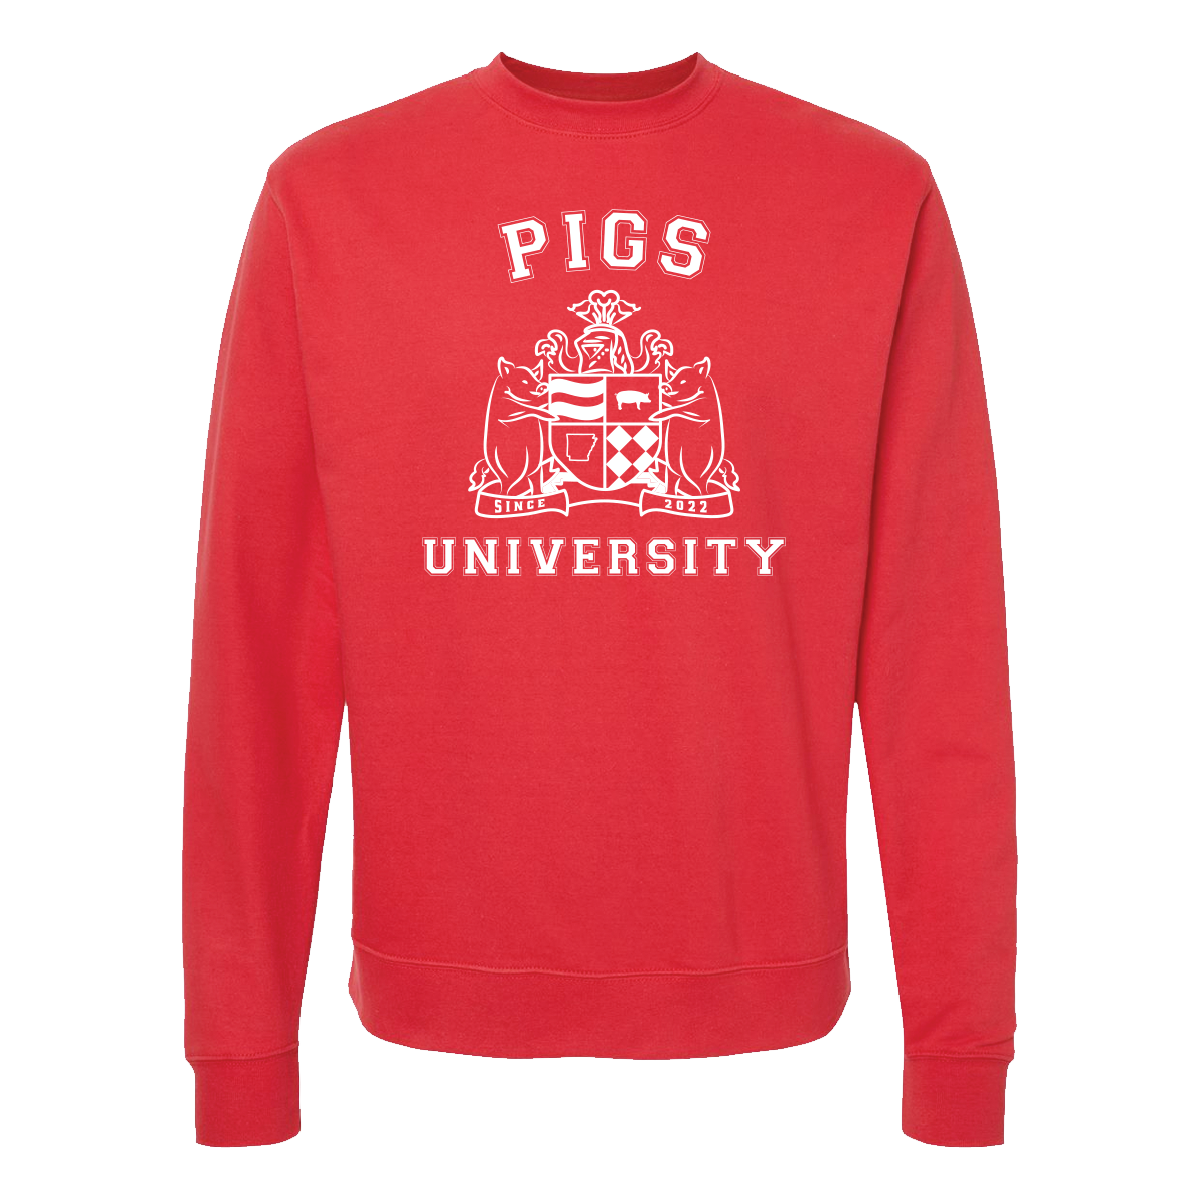 PIGS University Crewneck- Red